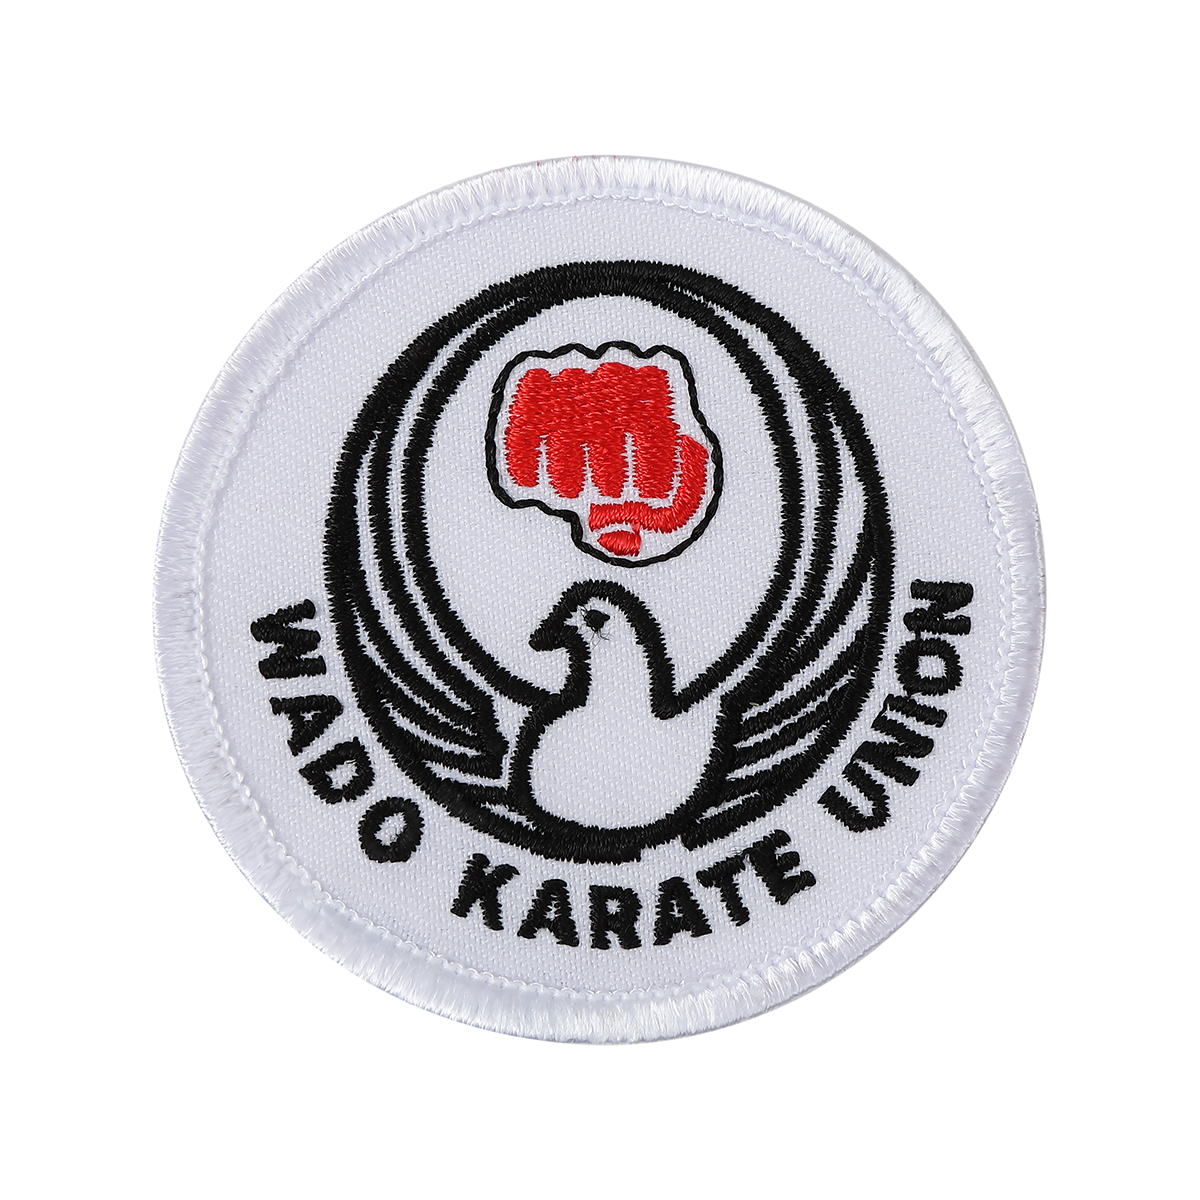 Wado Karate Union Patch - Click Image to Close